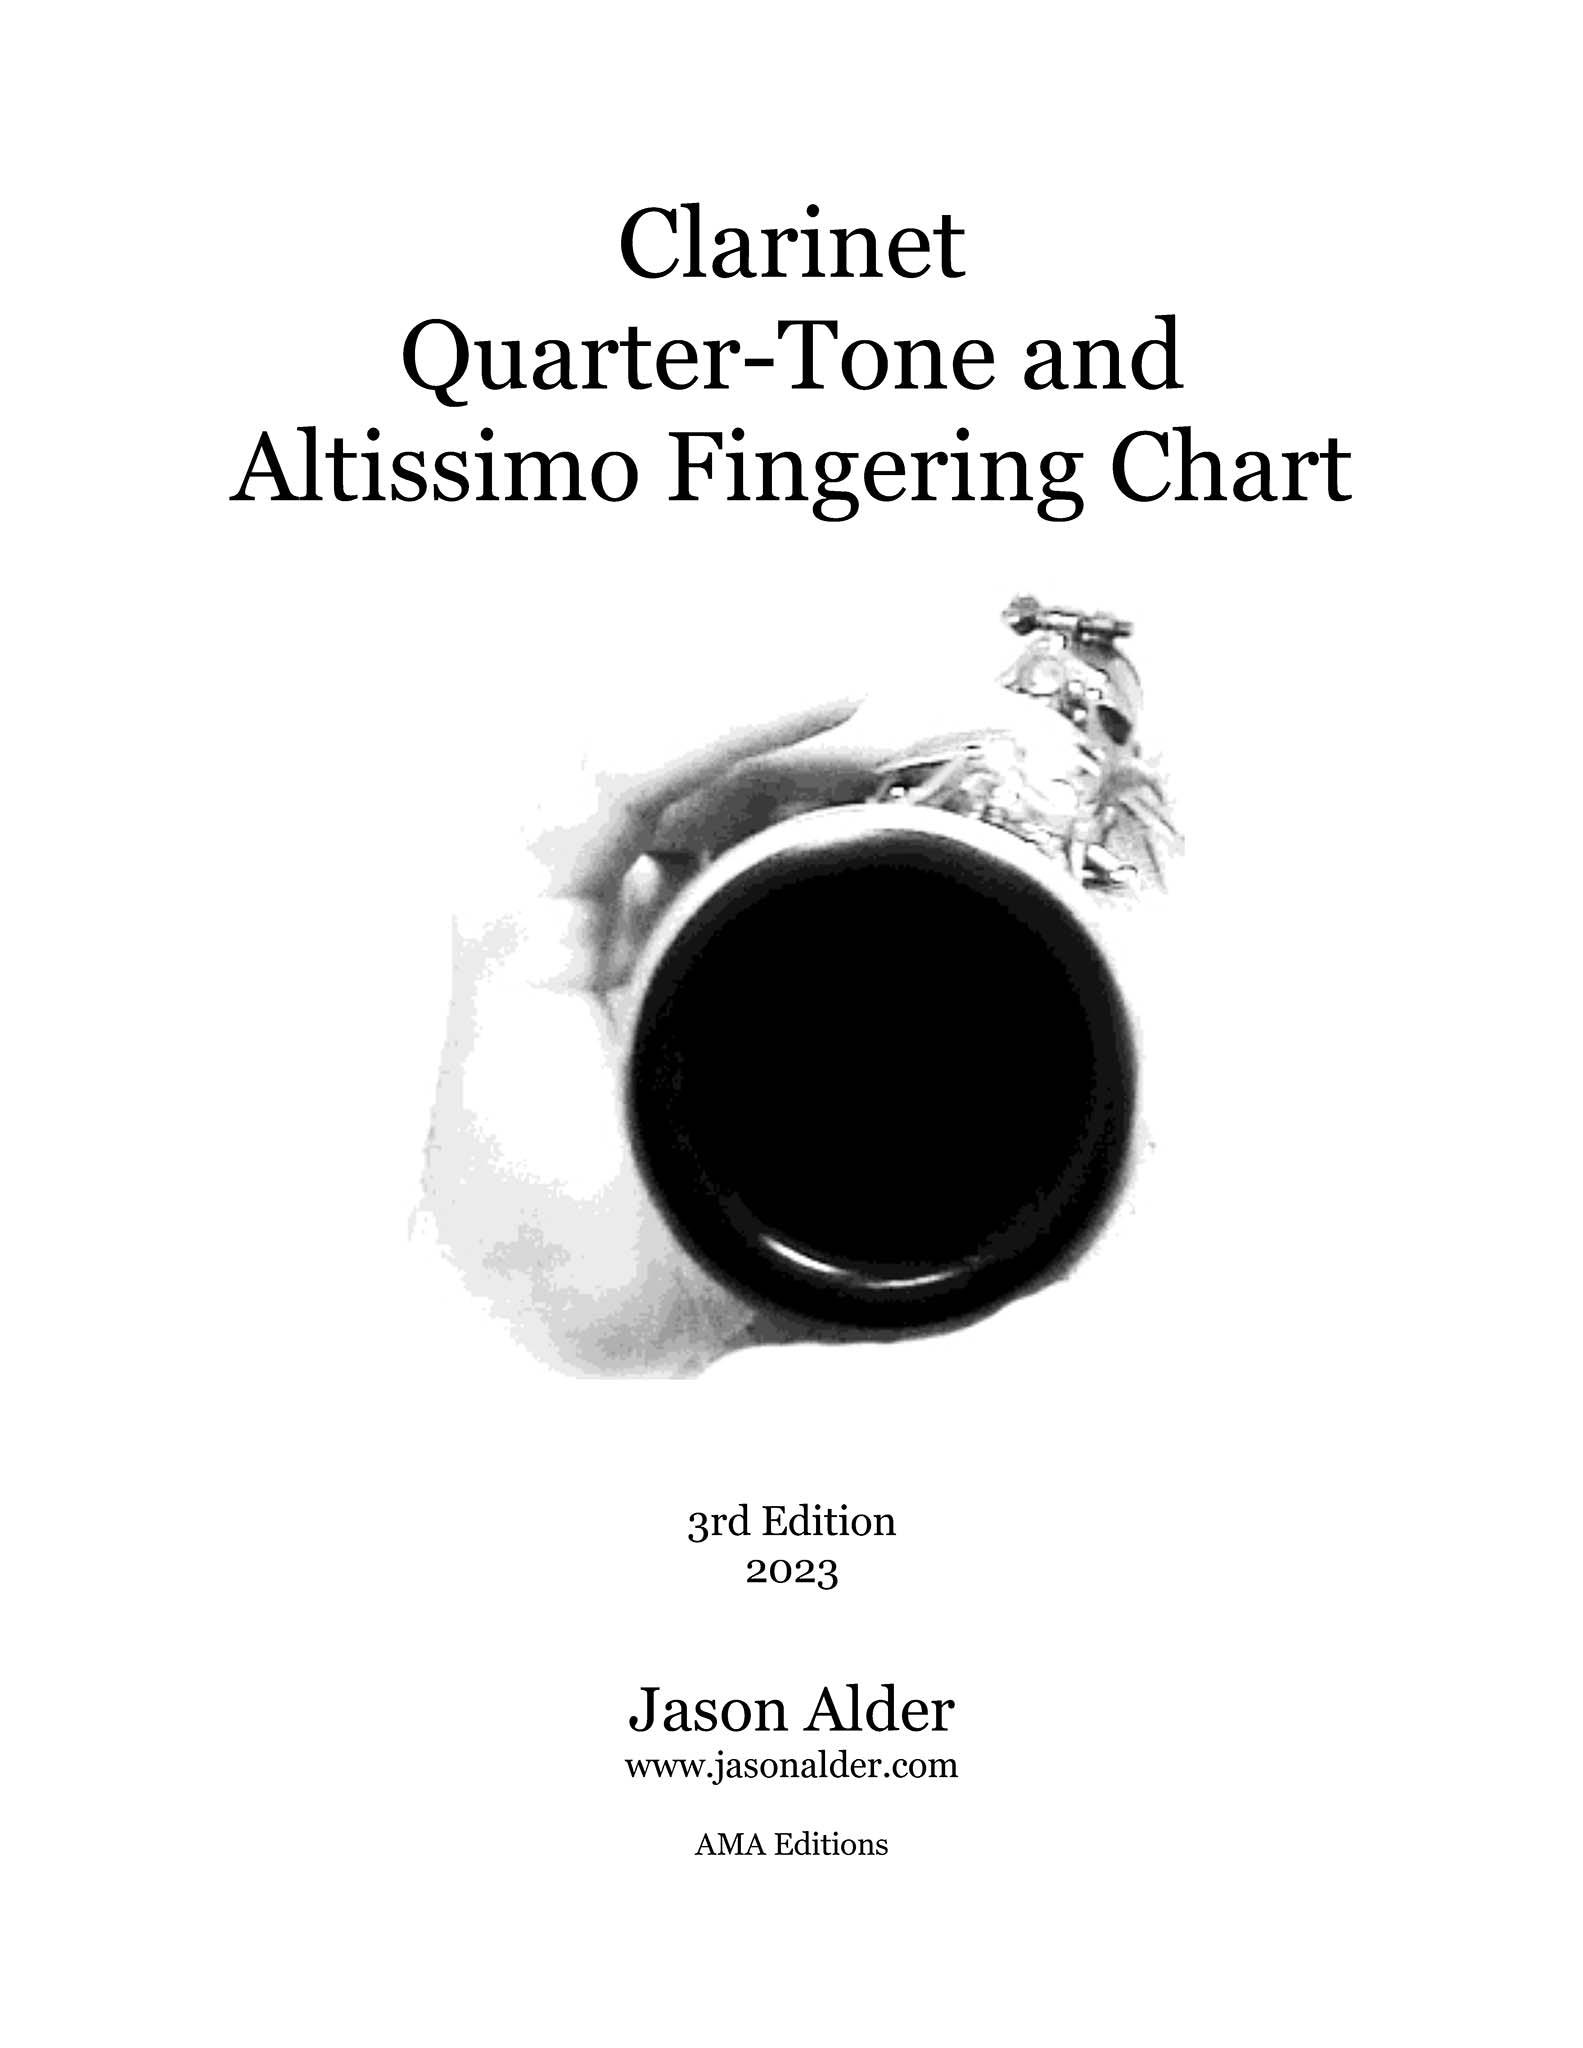 Jason Alder Clarinet Quarter-Tone & Altissimo Fingering Chart cover